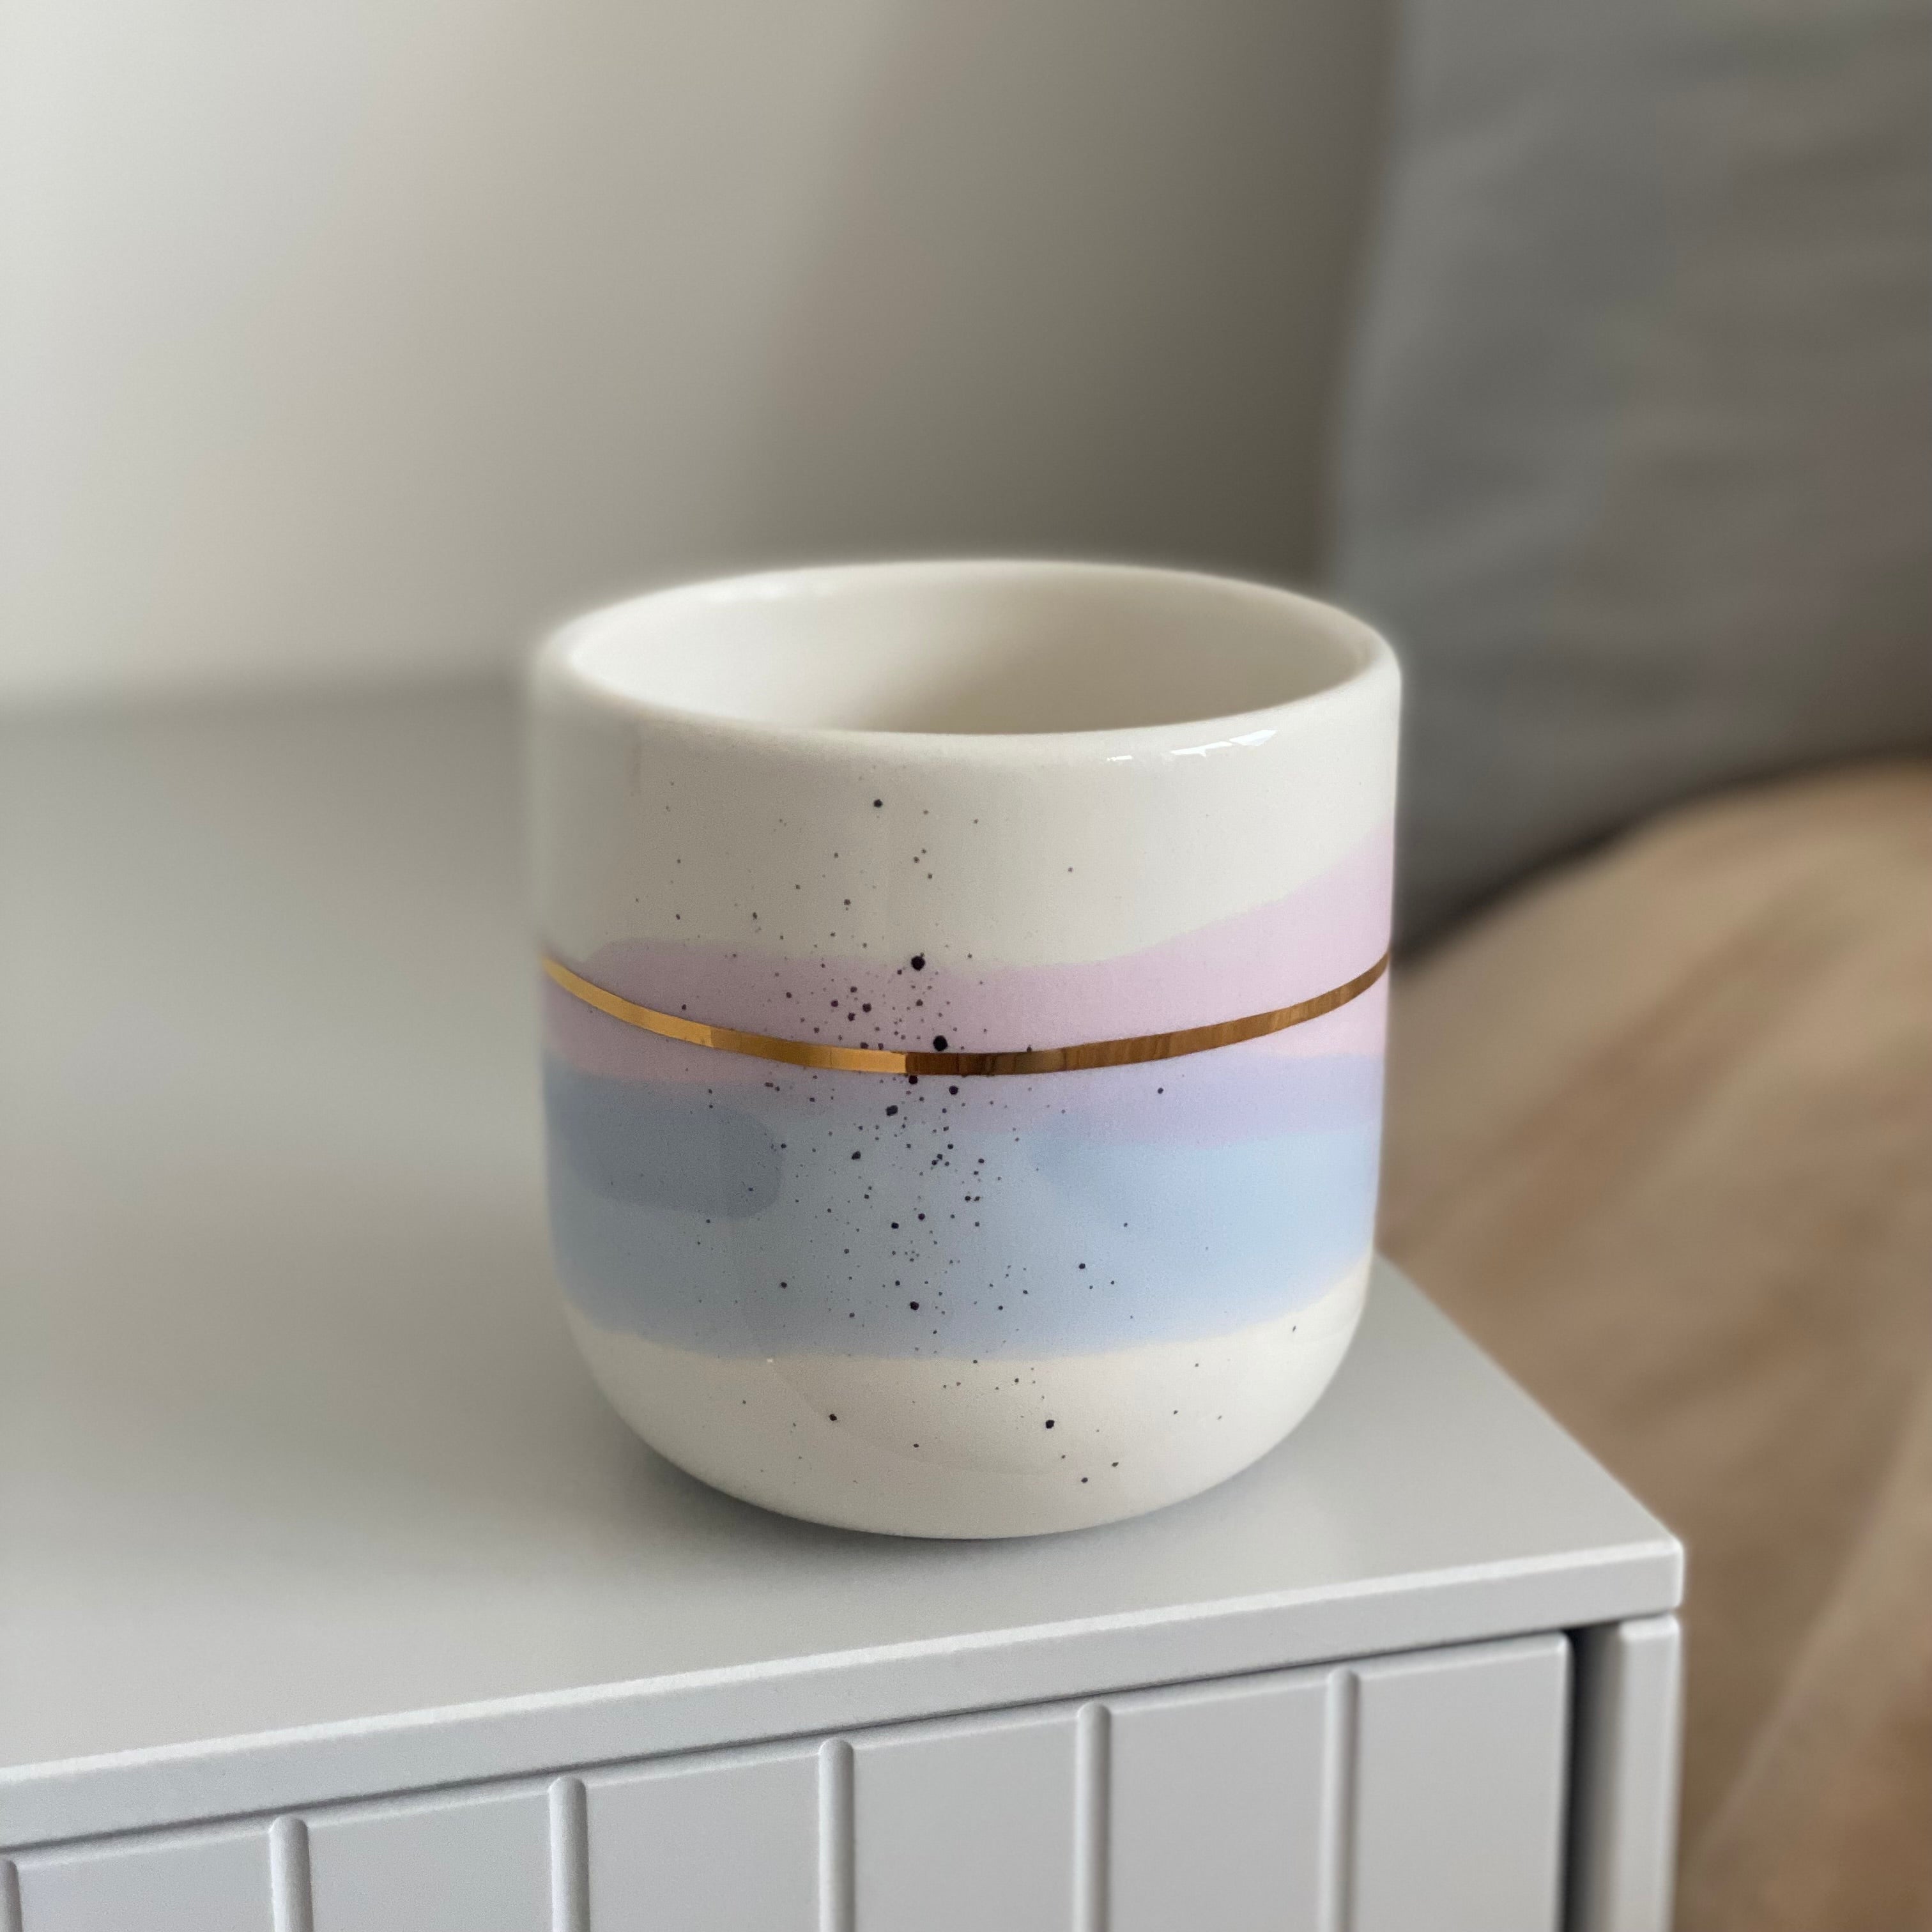 Marinski Heartmades latte kop Landscape - serenity (farver i midten)